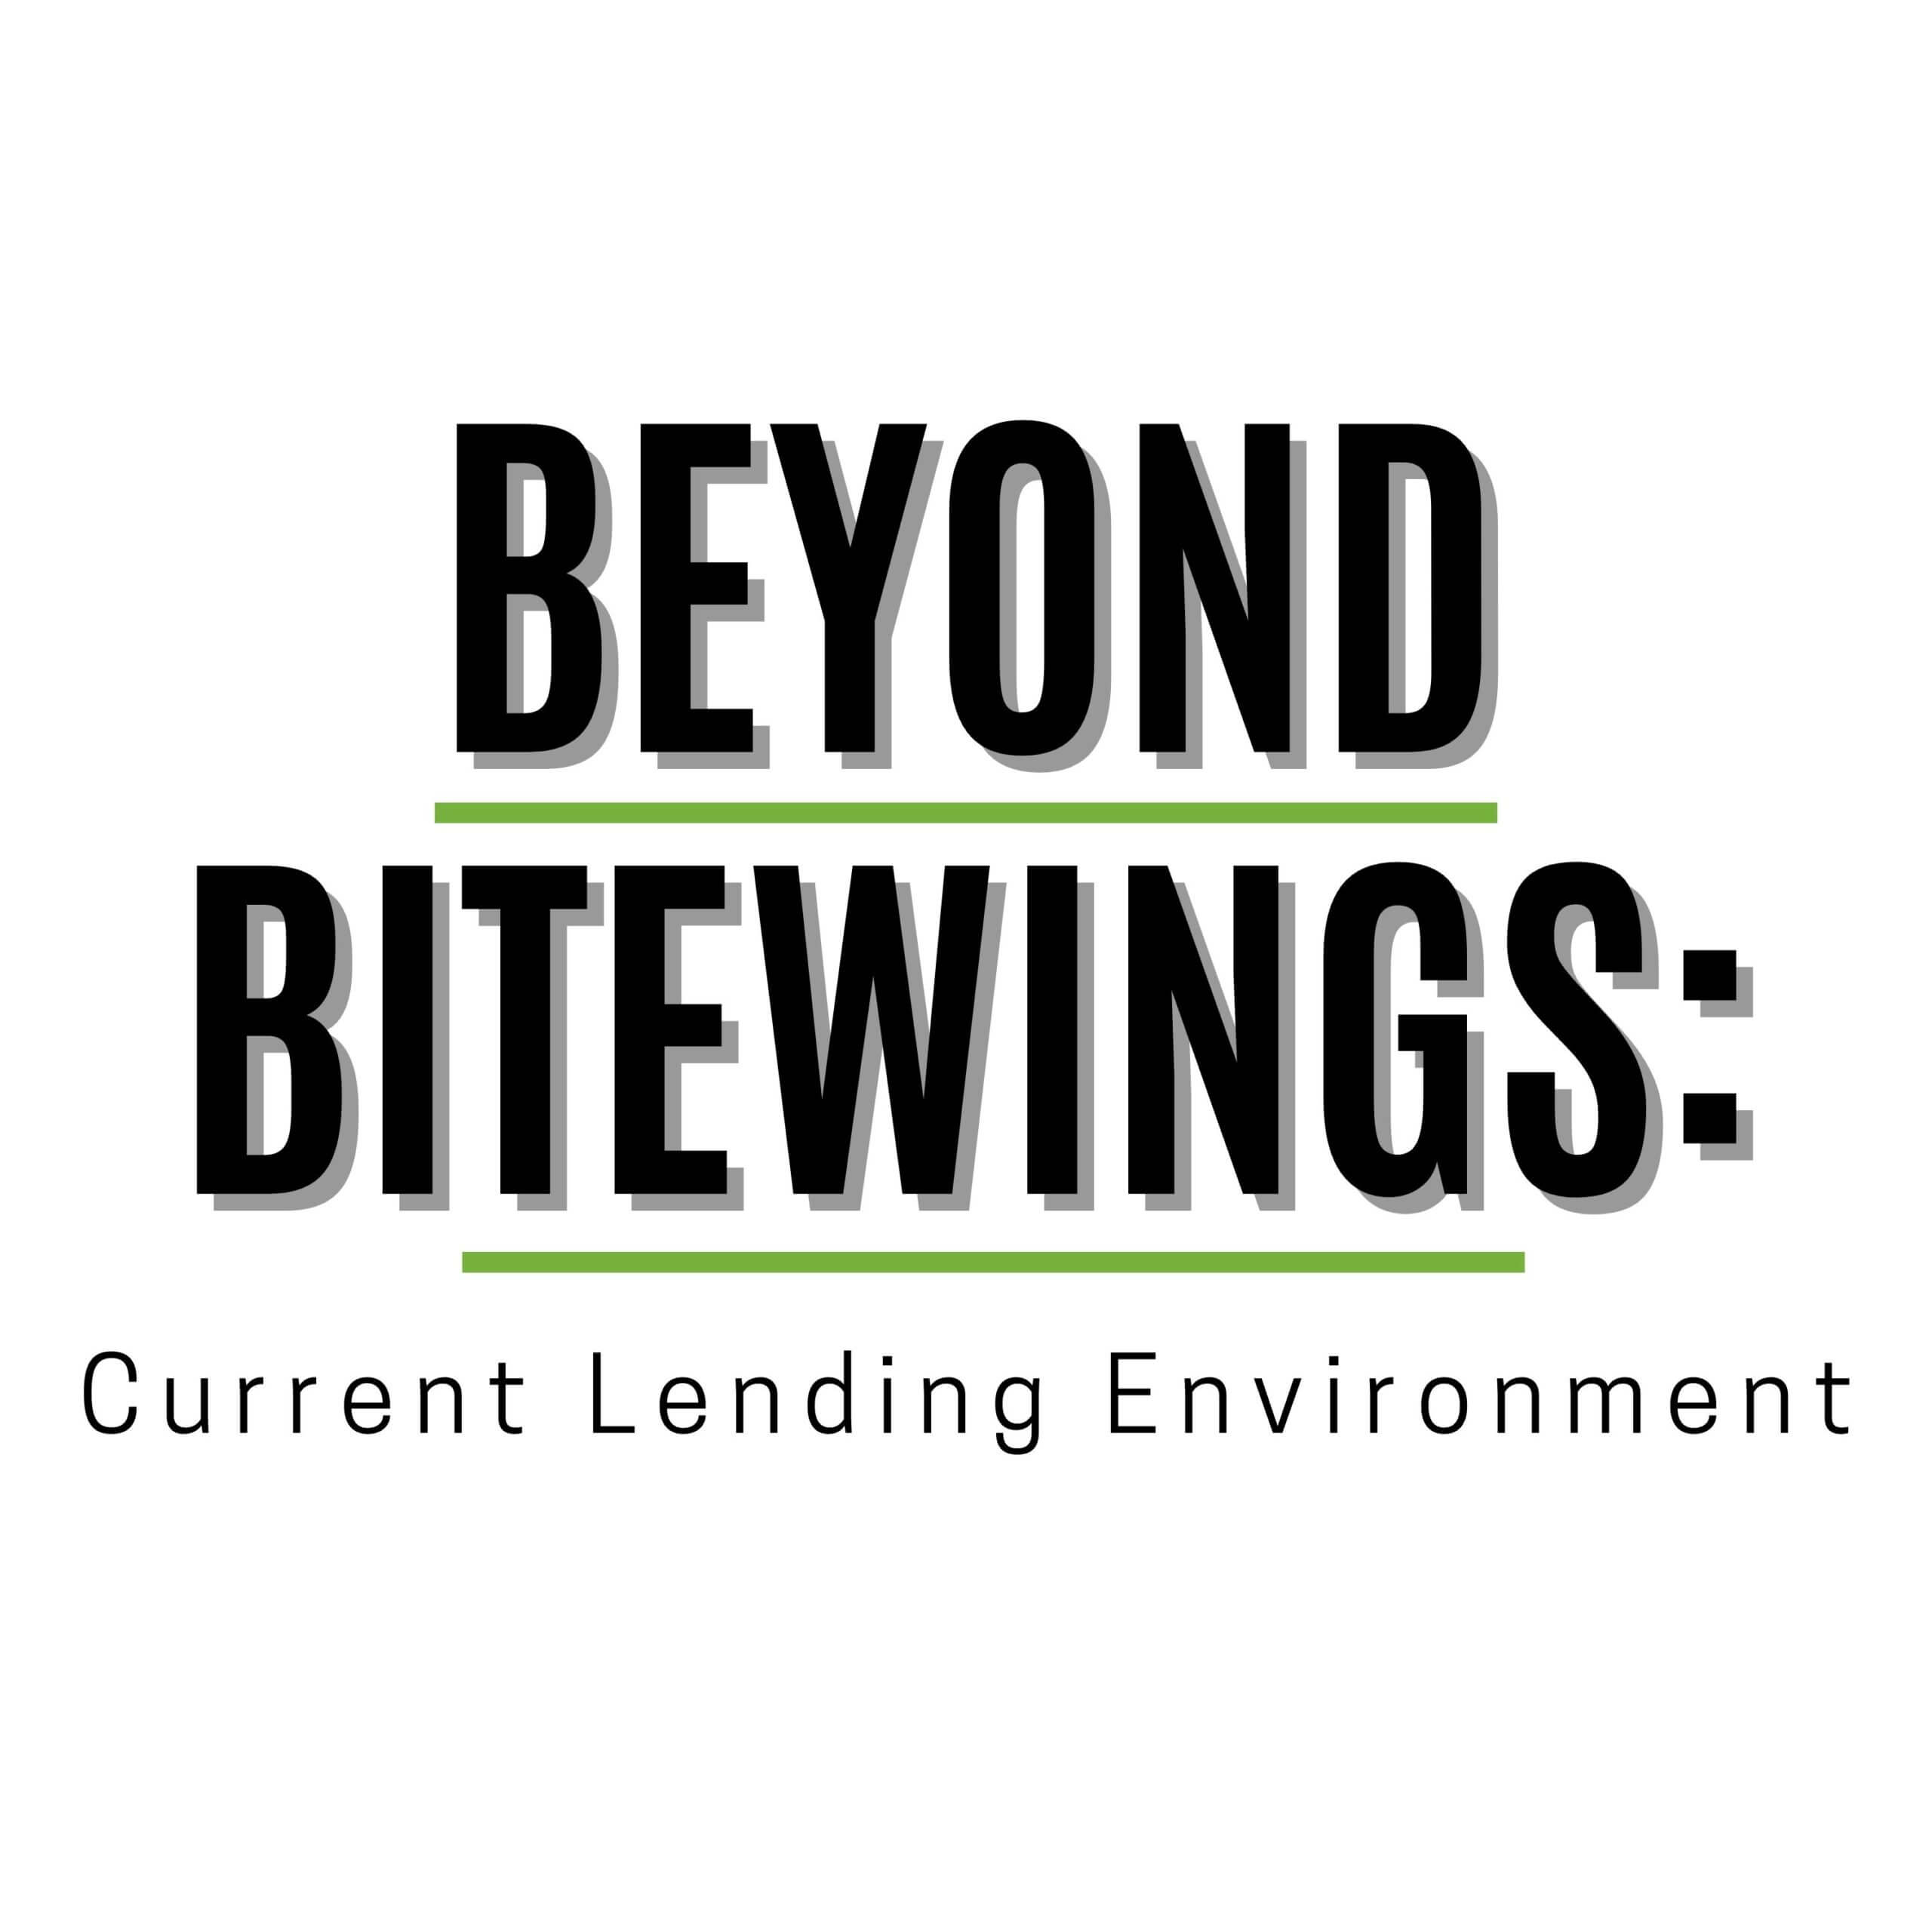 Current Lending Environment